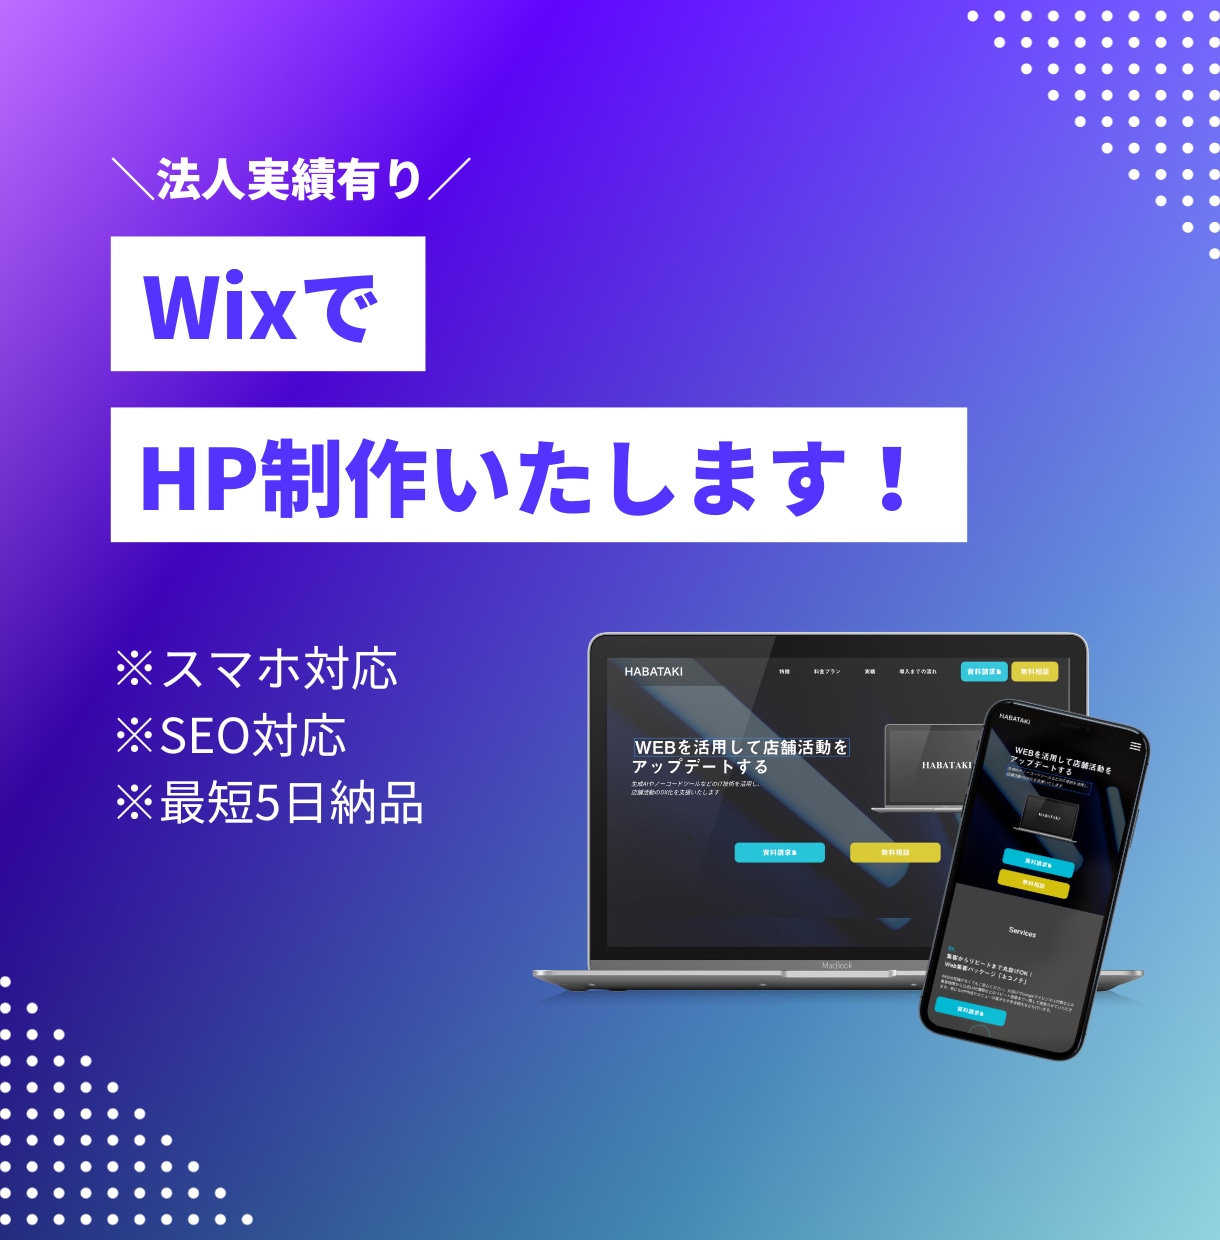 Wixでホームページ作成します WebマーケターがWixでHPを作成します イメージ1